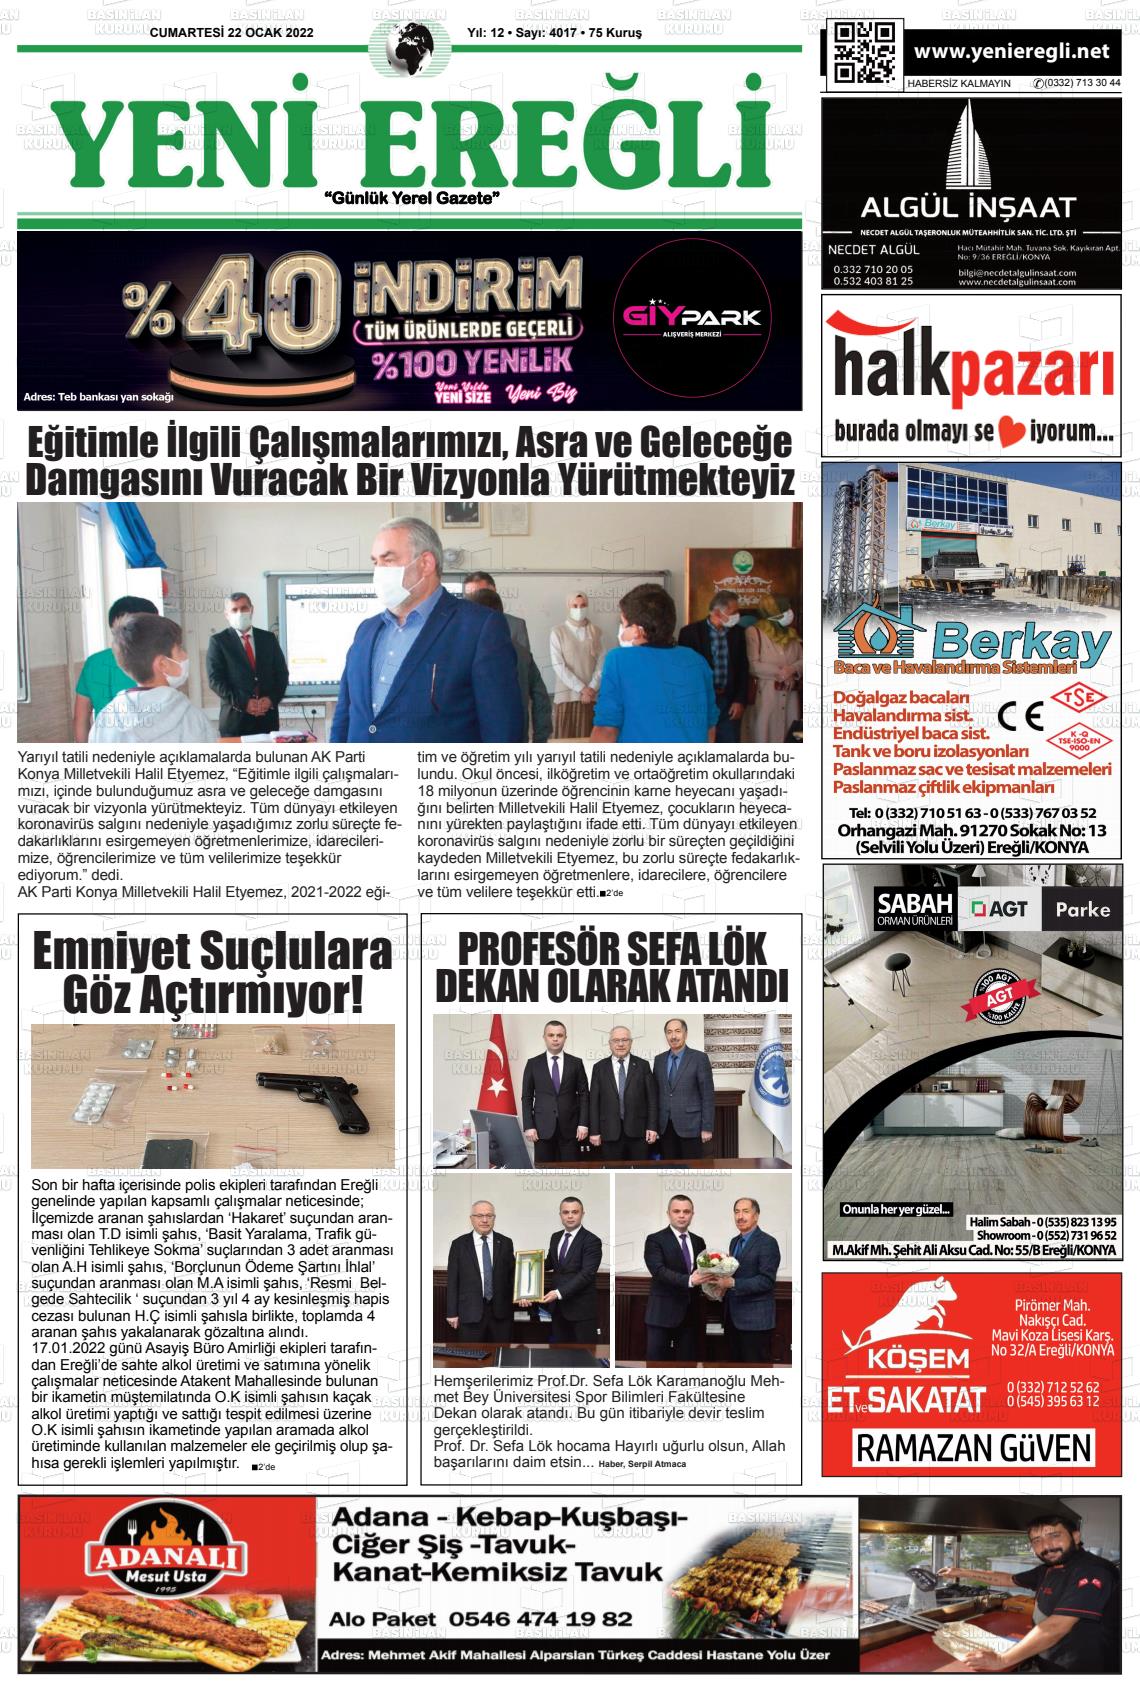 22 Ocak 2022 Yeni Ereğli Gazete Manşeti